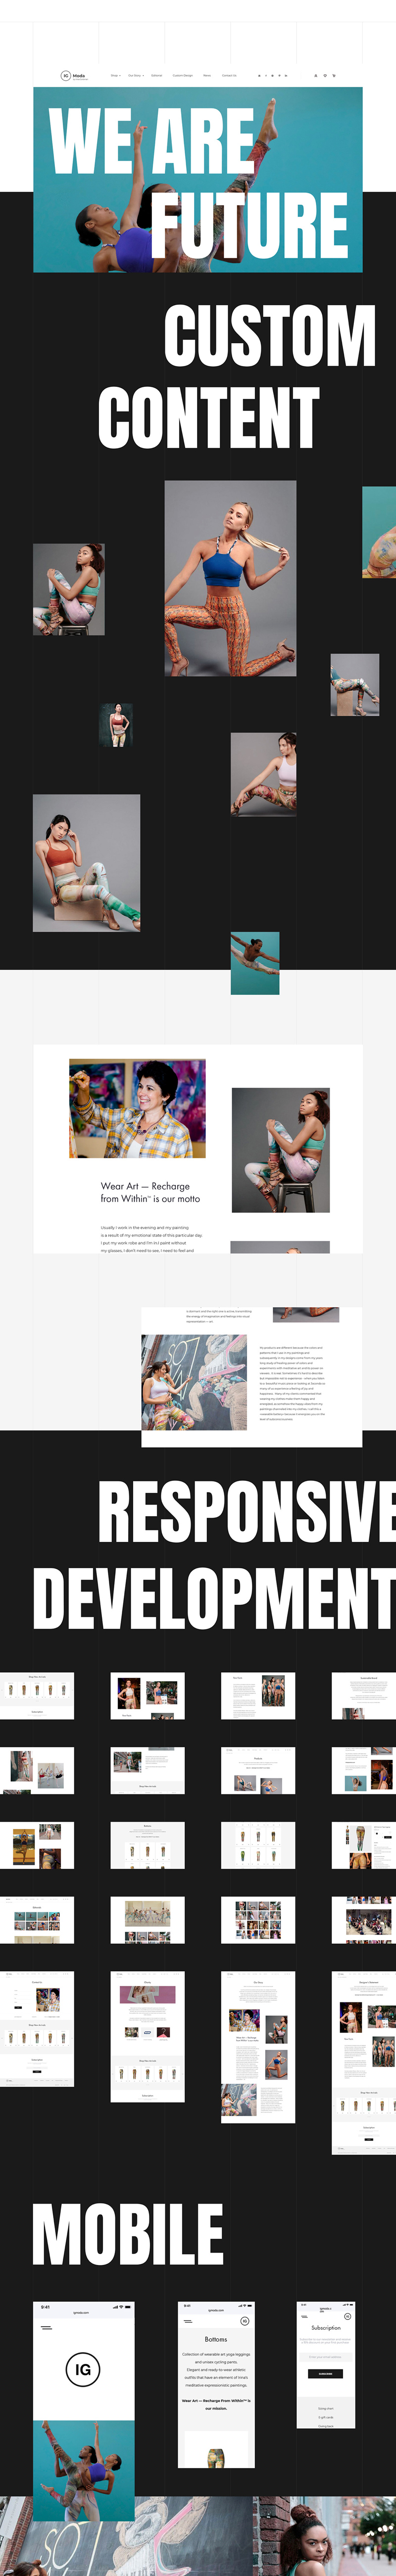 IG MODA – Website & Fashion UI Kit For Adobe Xd